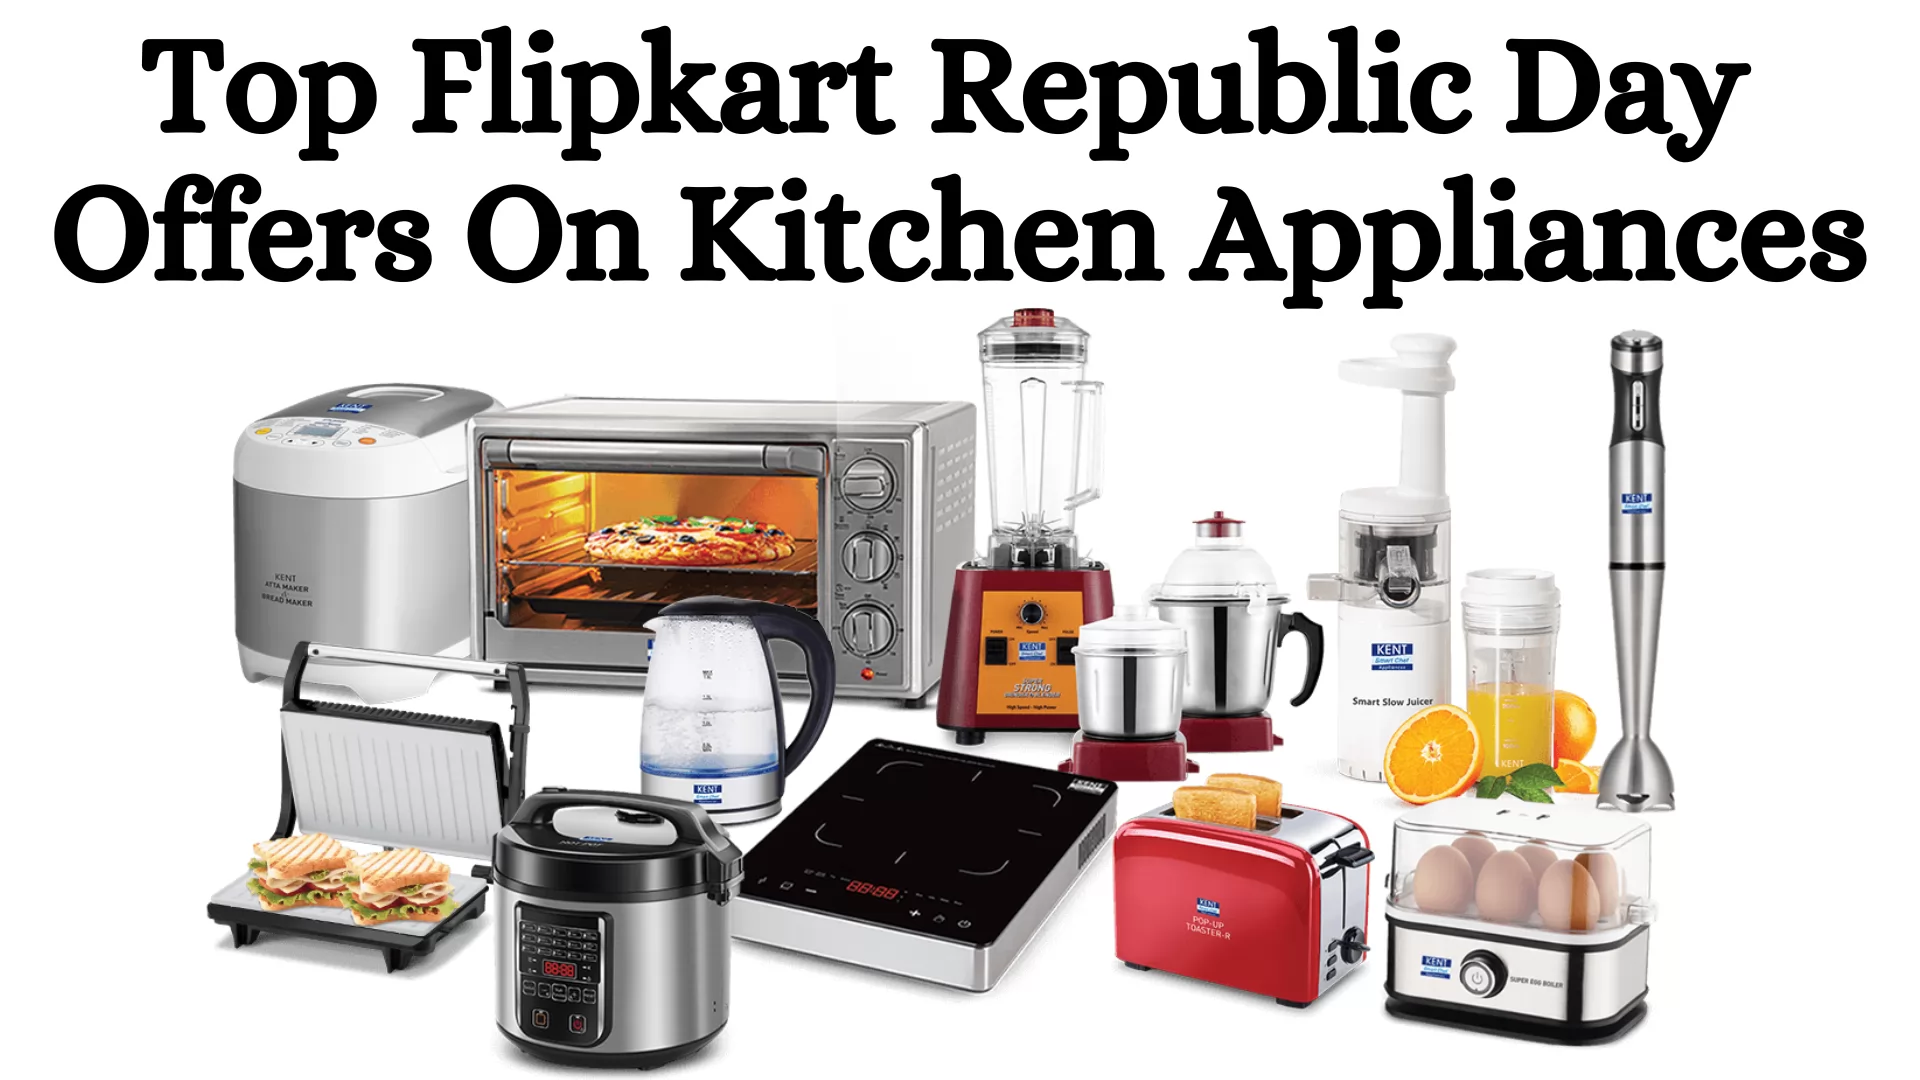 Top 11 Flipkart Republic Day Offers on Kitchen Appliances